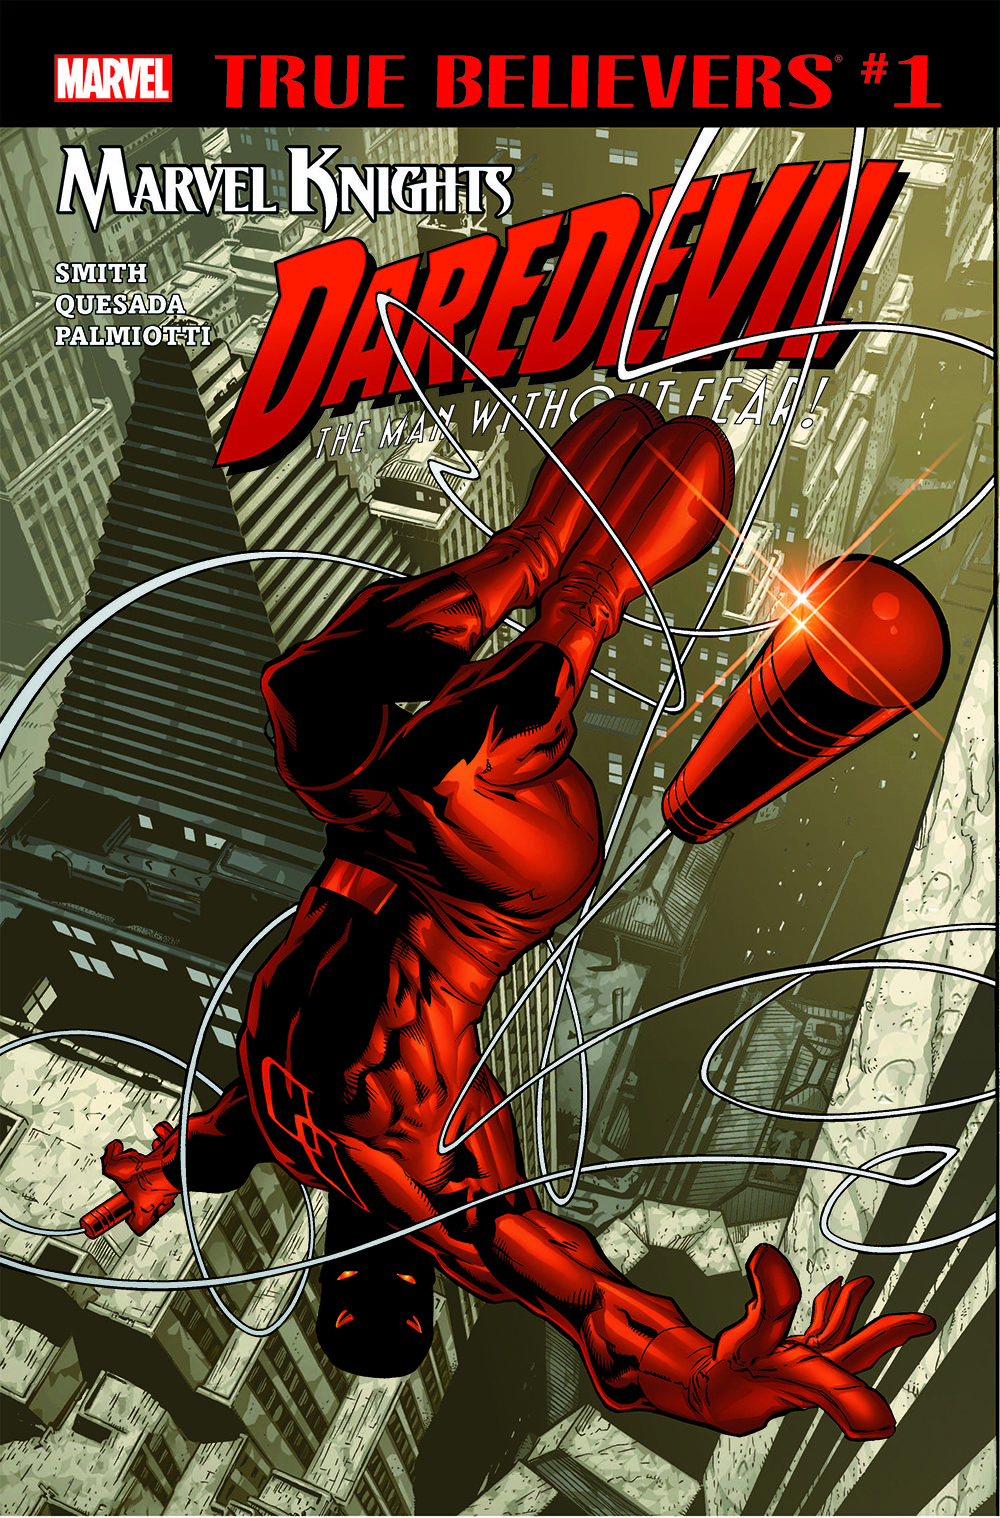 True Believers: Marvel Knights 20th Anniversary - Daredevil by Smith, Quesada & Palmiotti (2018) #1